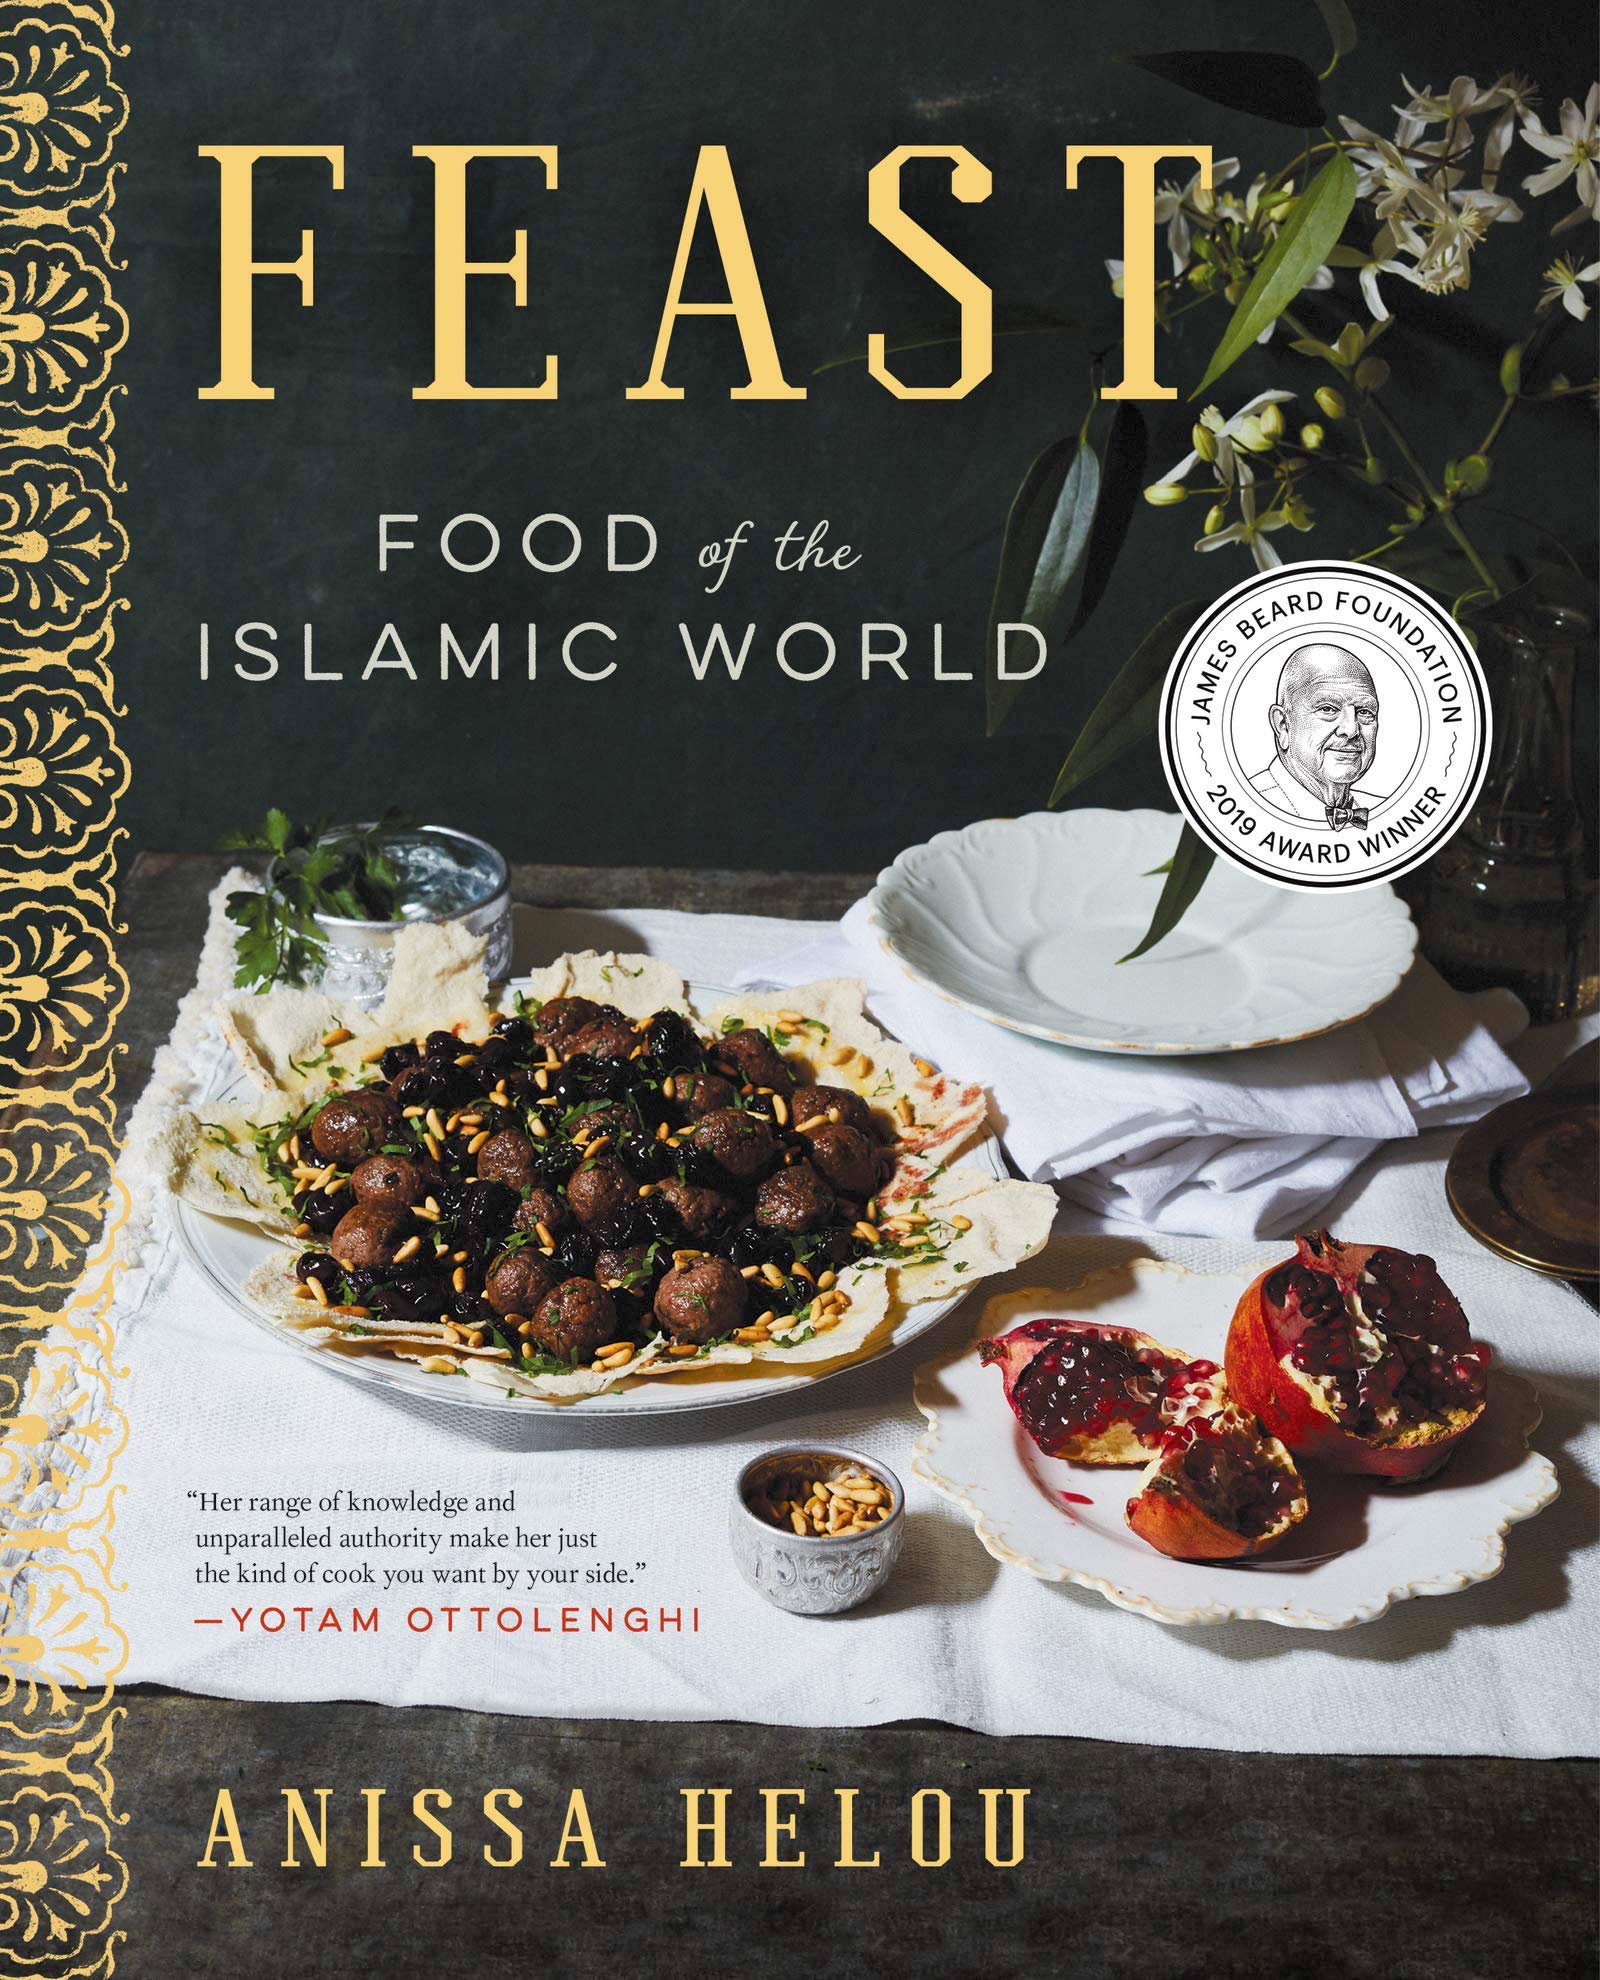 Feast- Food of the Islamic World cookbook